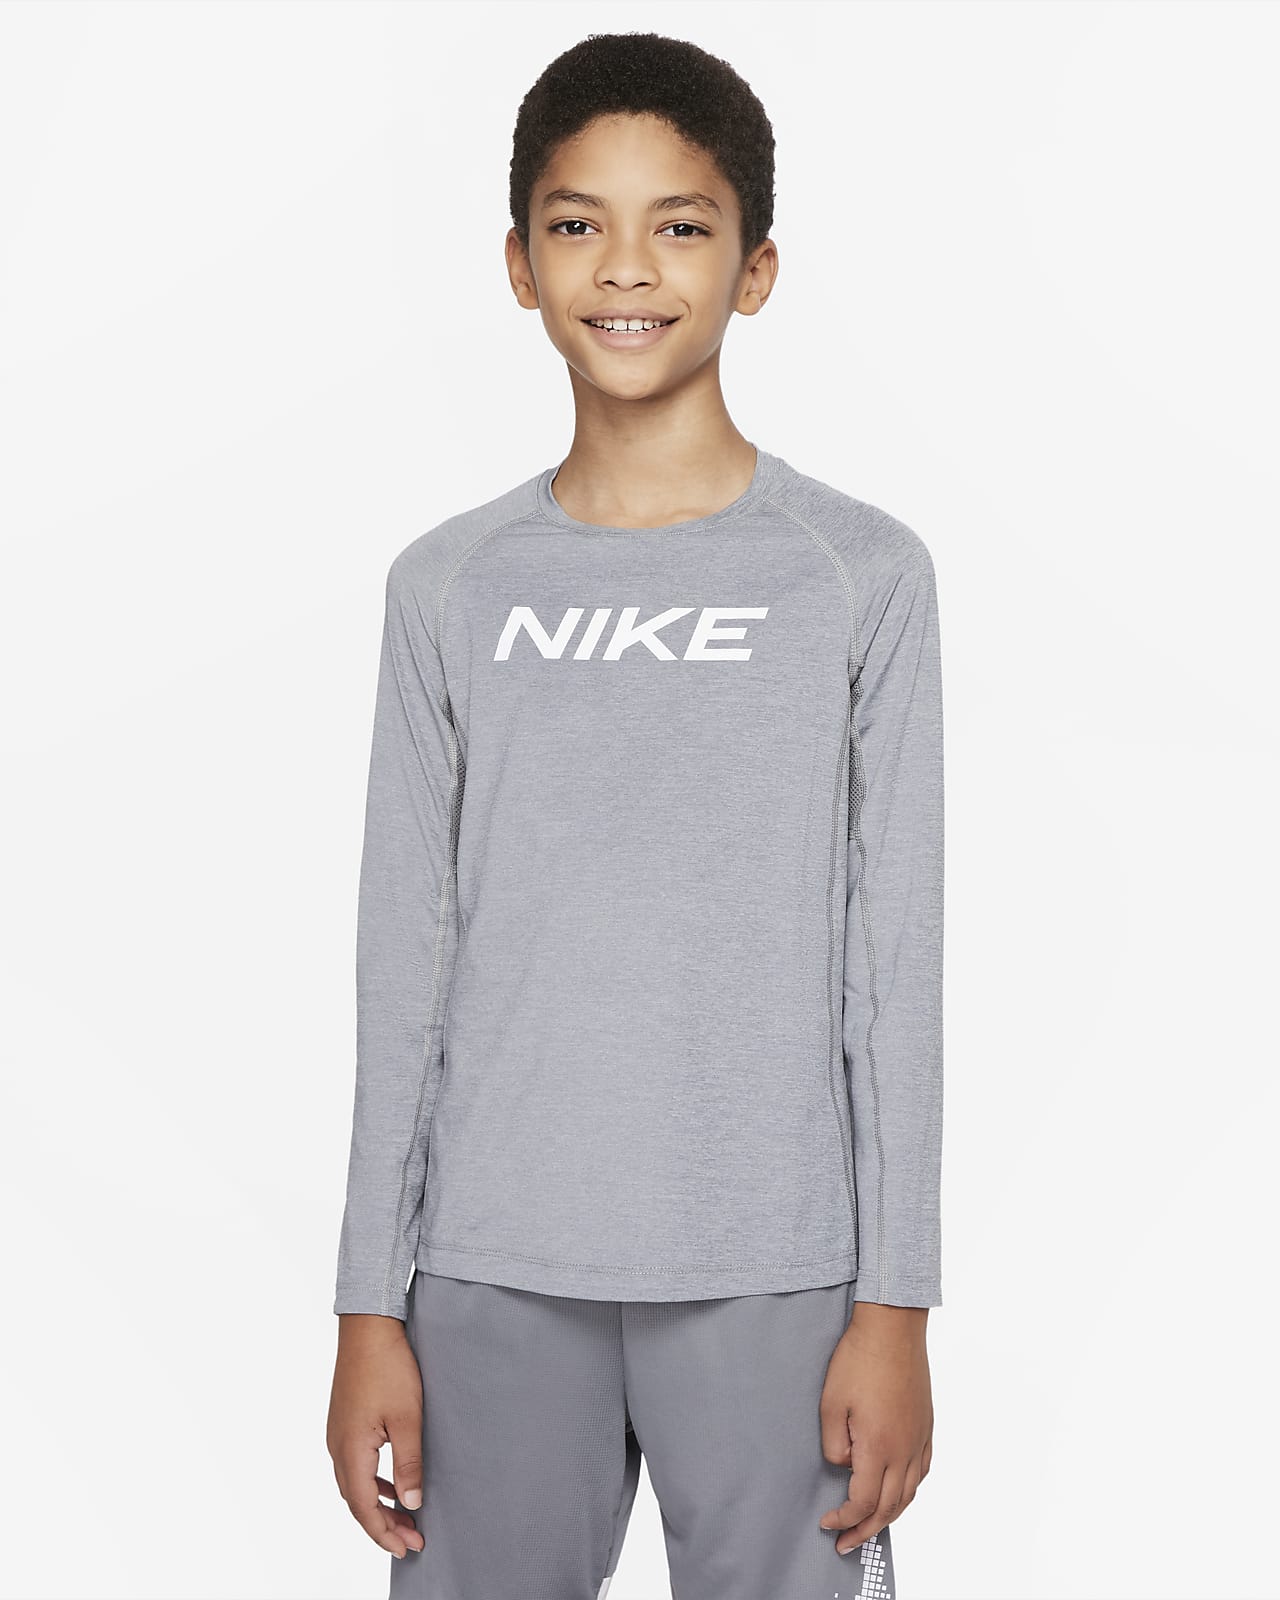 Playera de manga larga para niño talla Dri-FIT. Nike.com